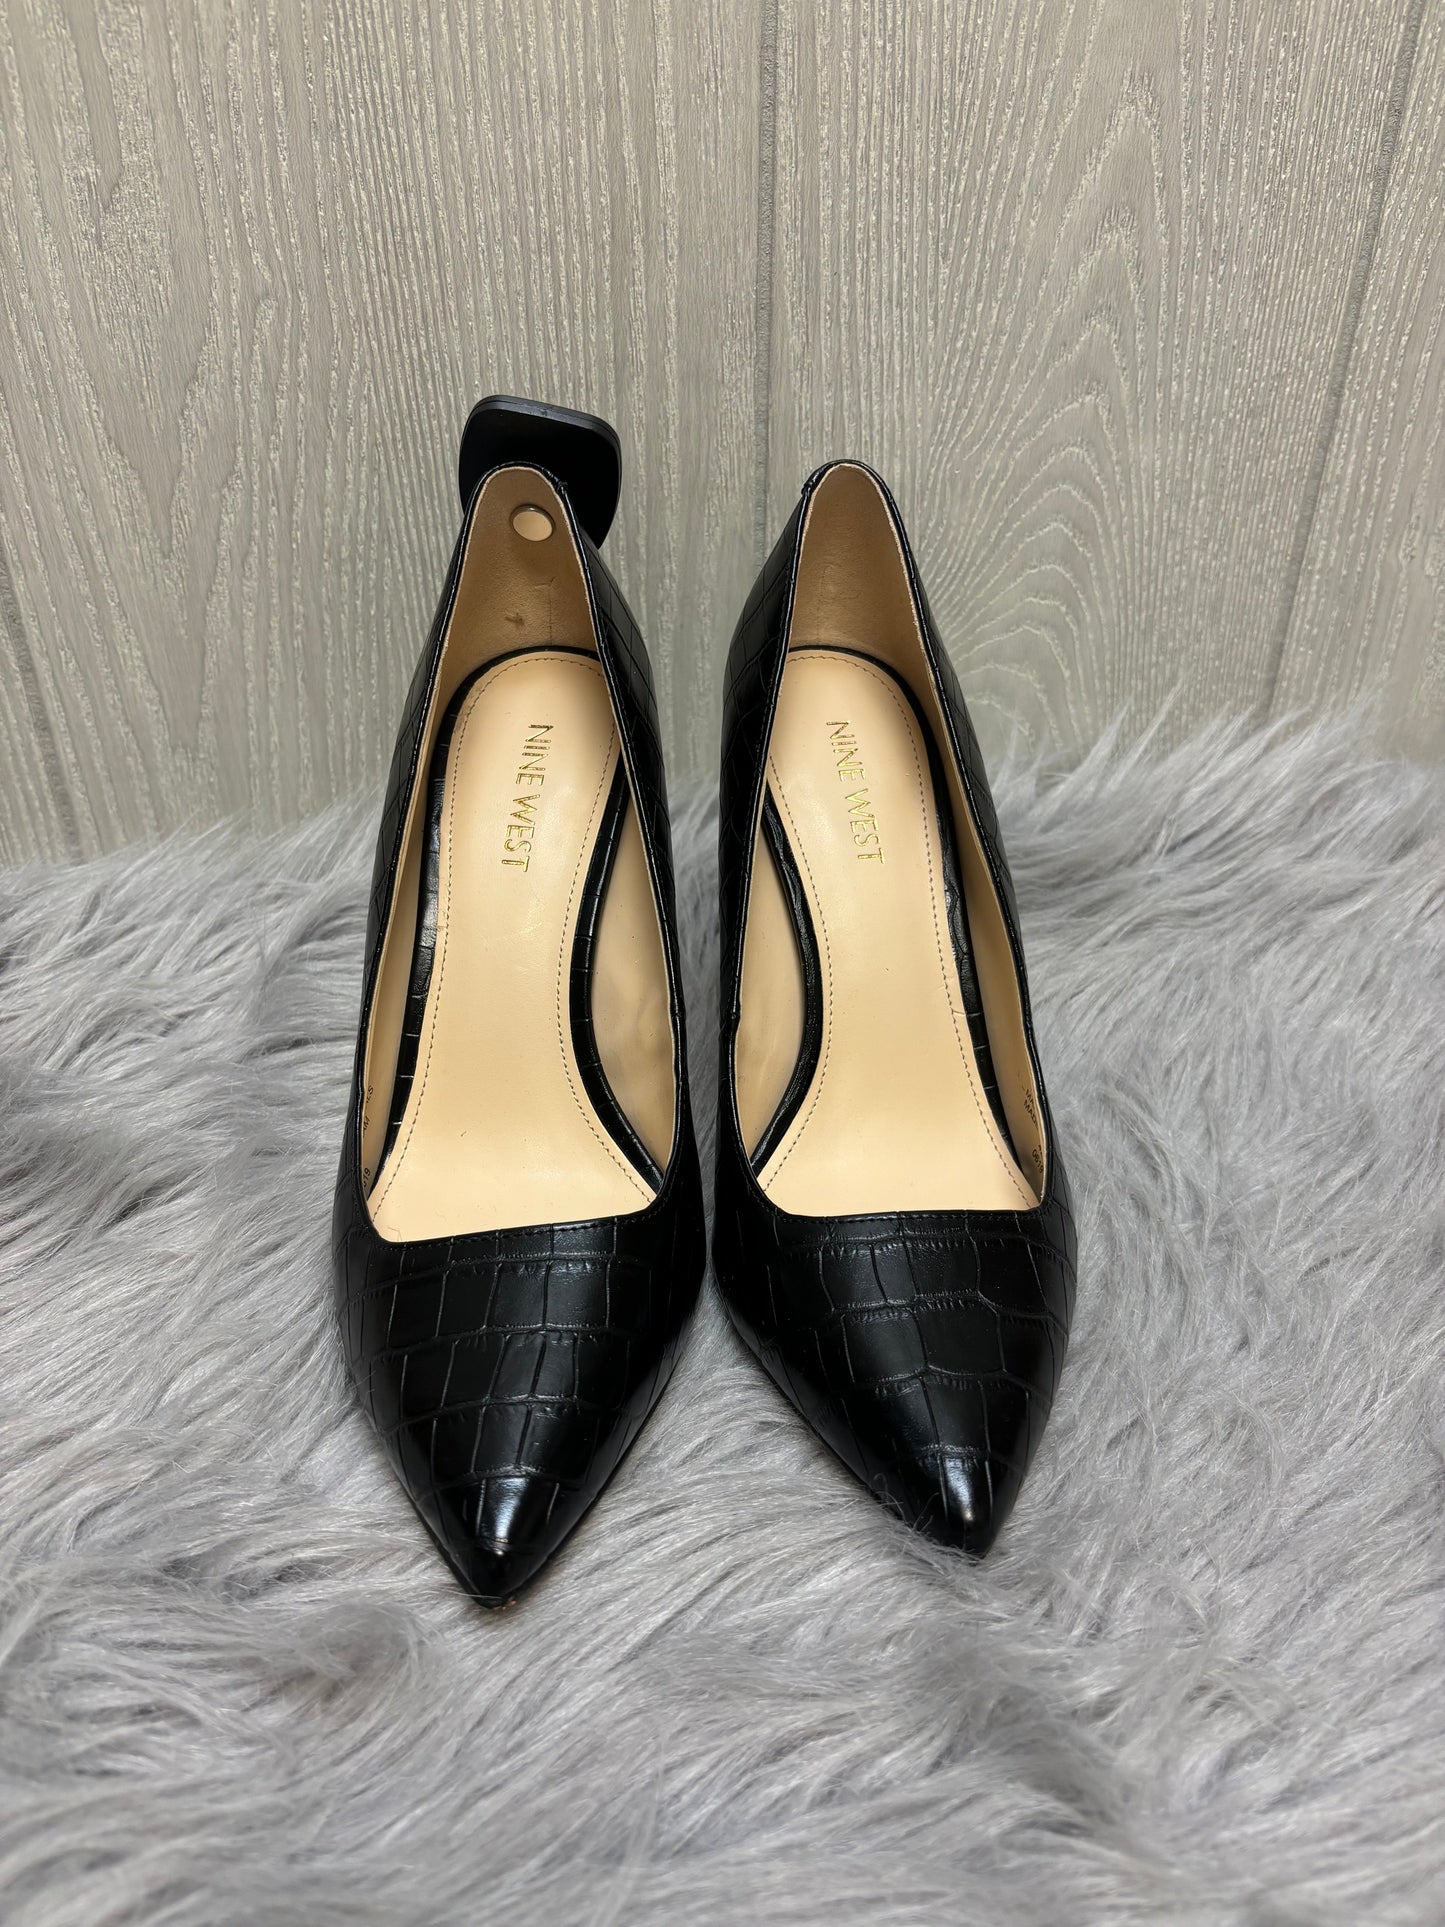 Black Shoes Heels Stiletto Nine West, Size 7.5